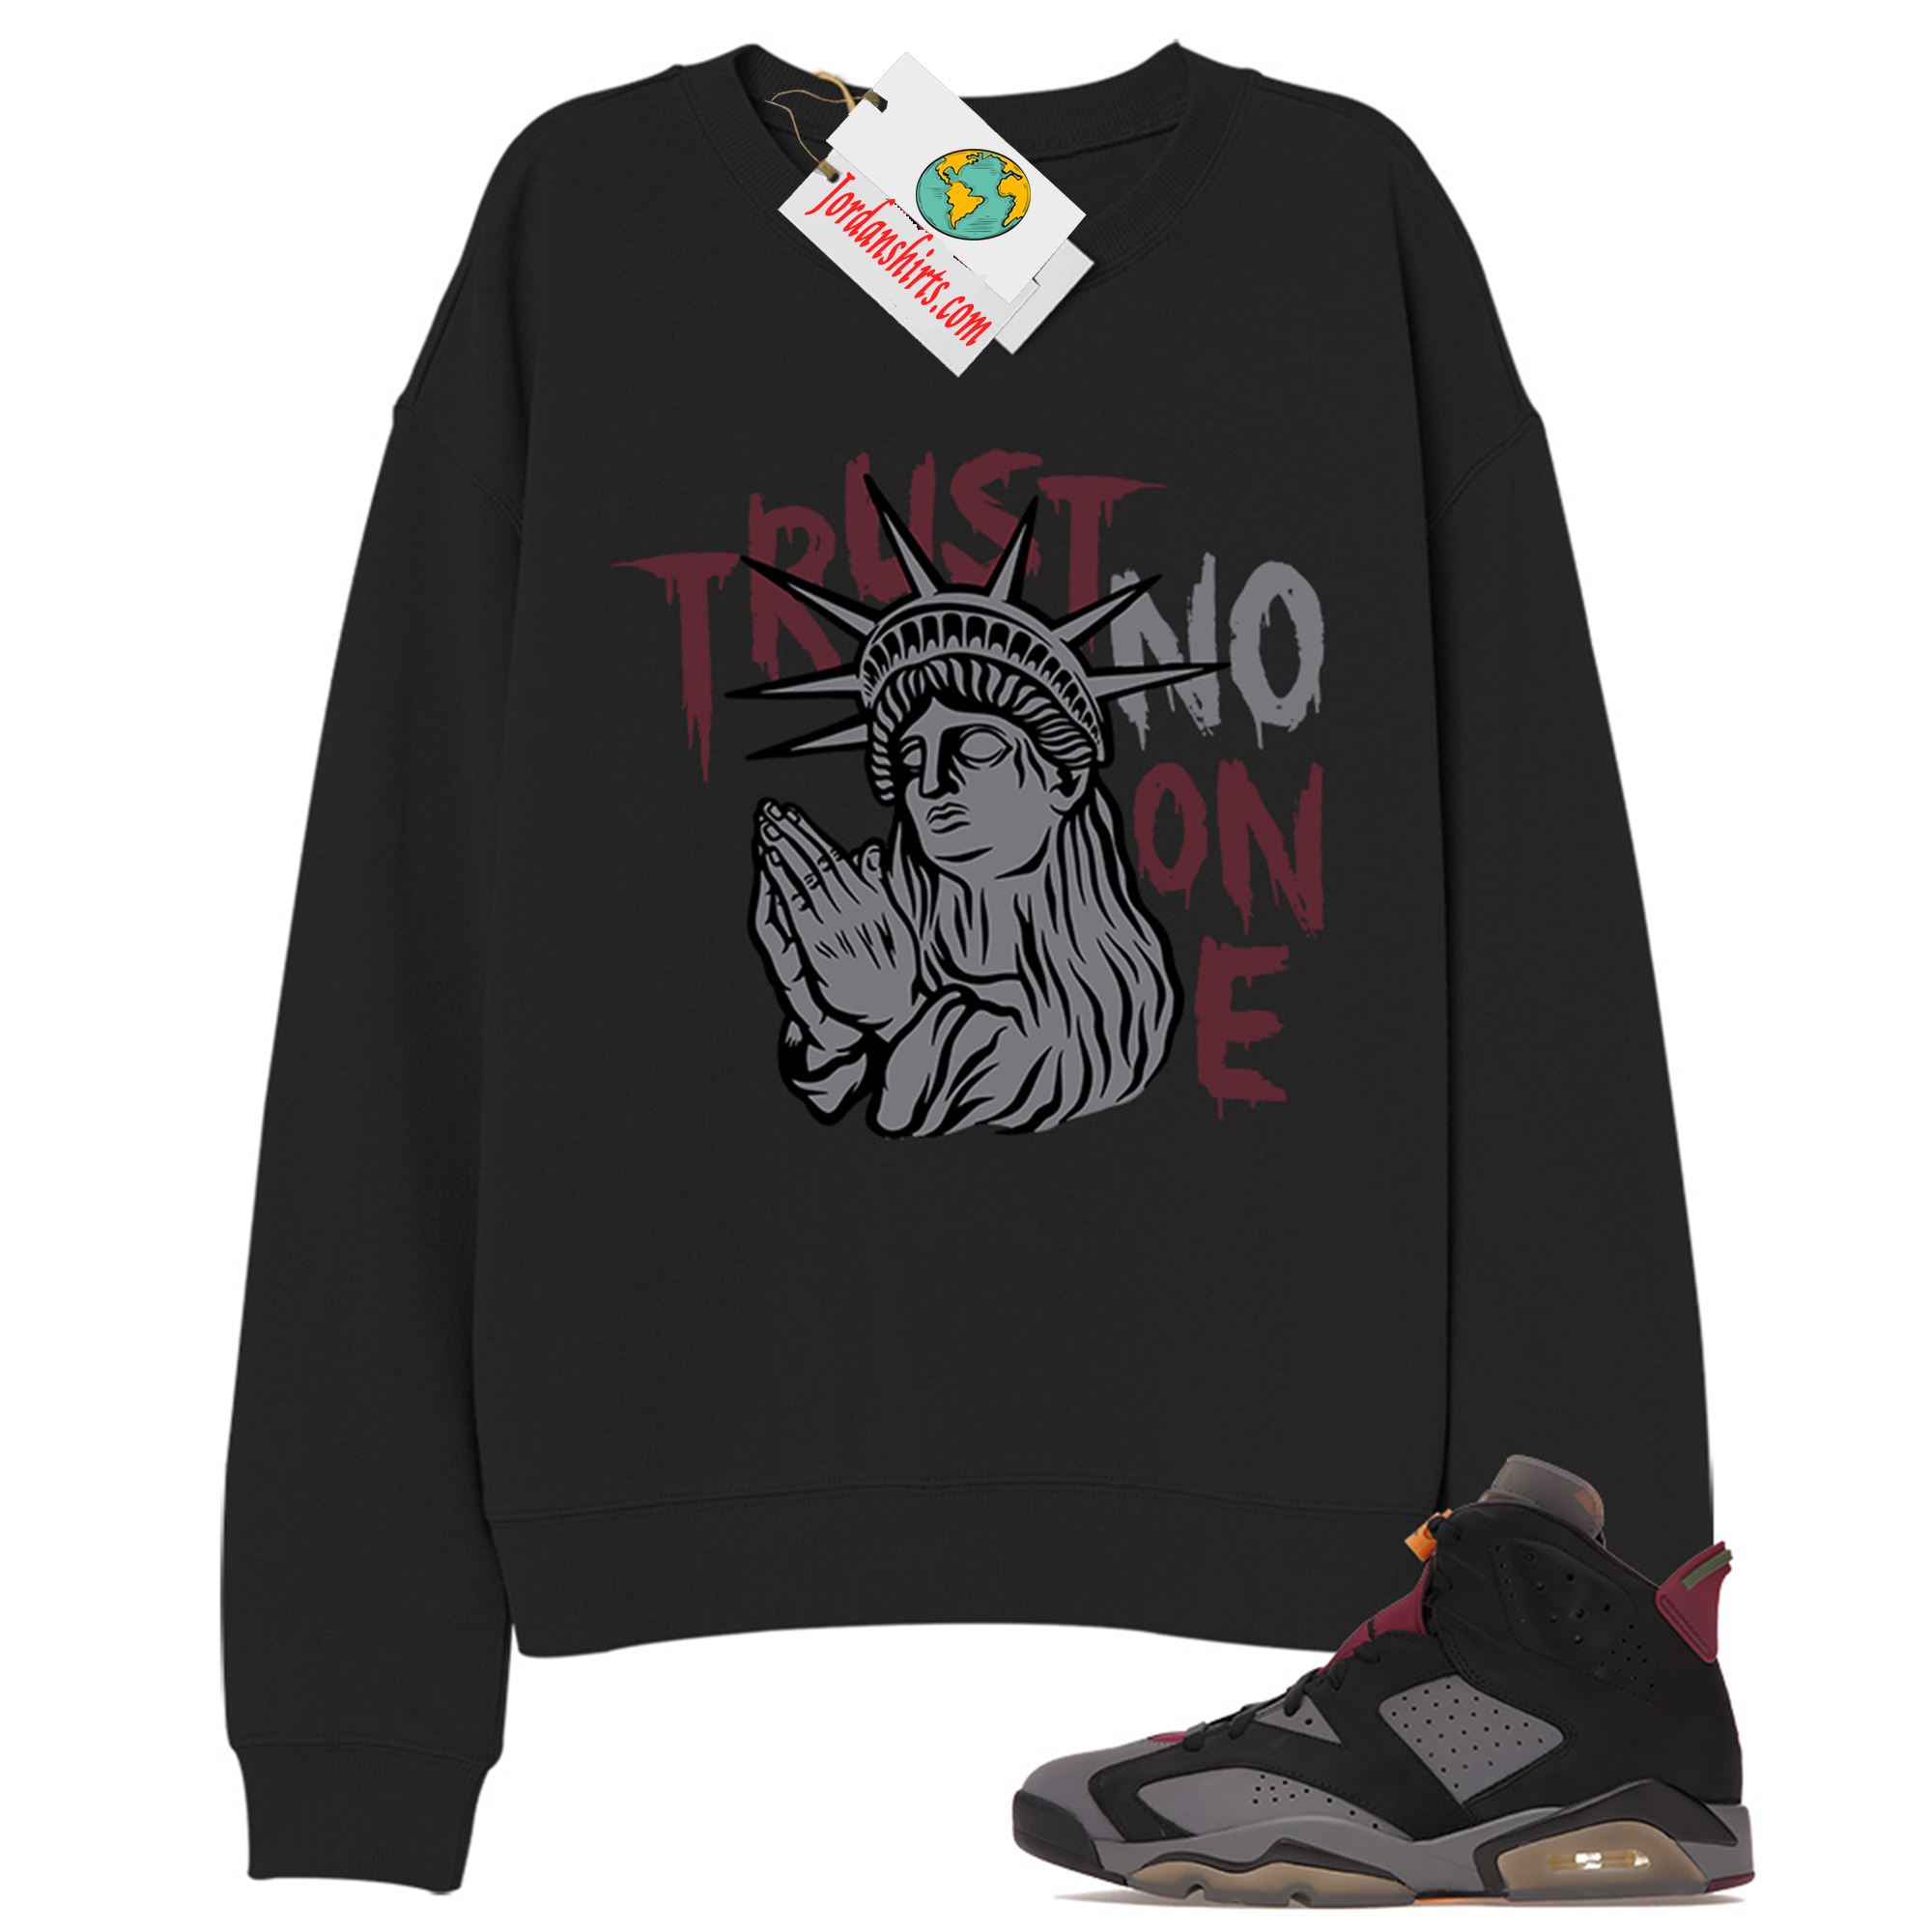 Jordan 6 Sweatshirt, Trust No One Statue Of Liberty Black Sweatshirt Air Jordan 6 Bordeaux 6s Size Up To 5xl